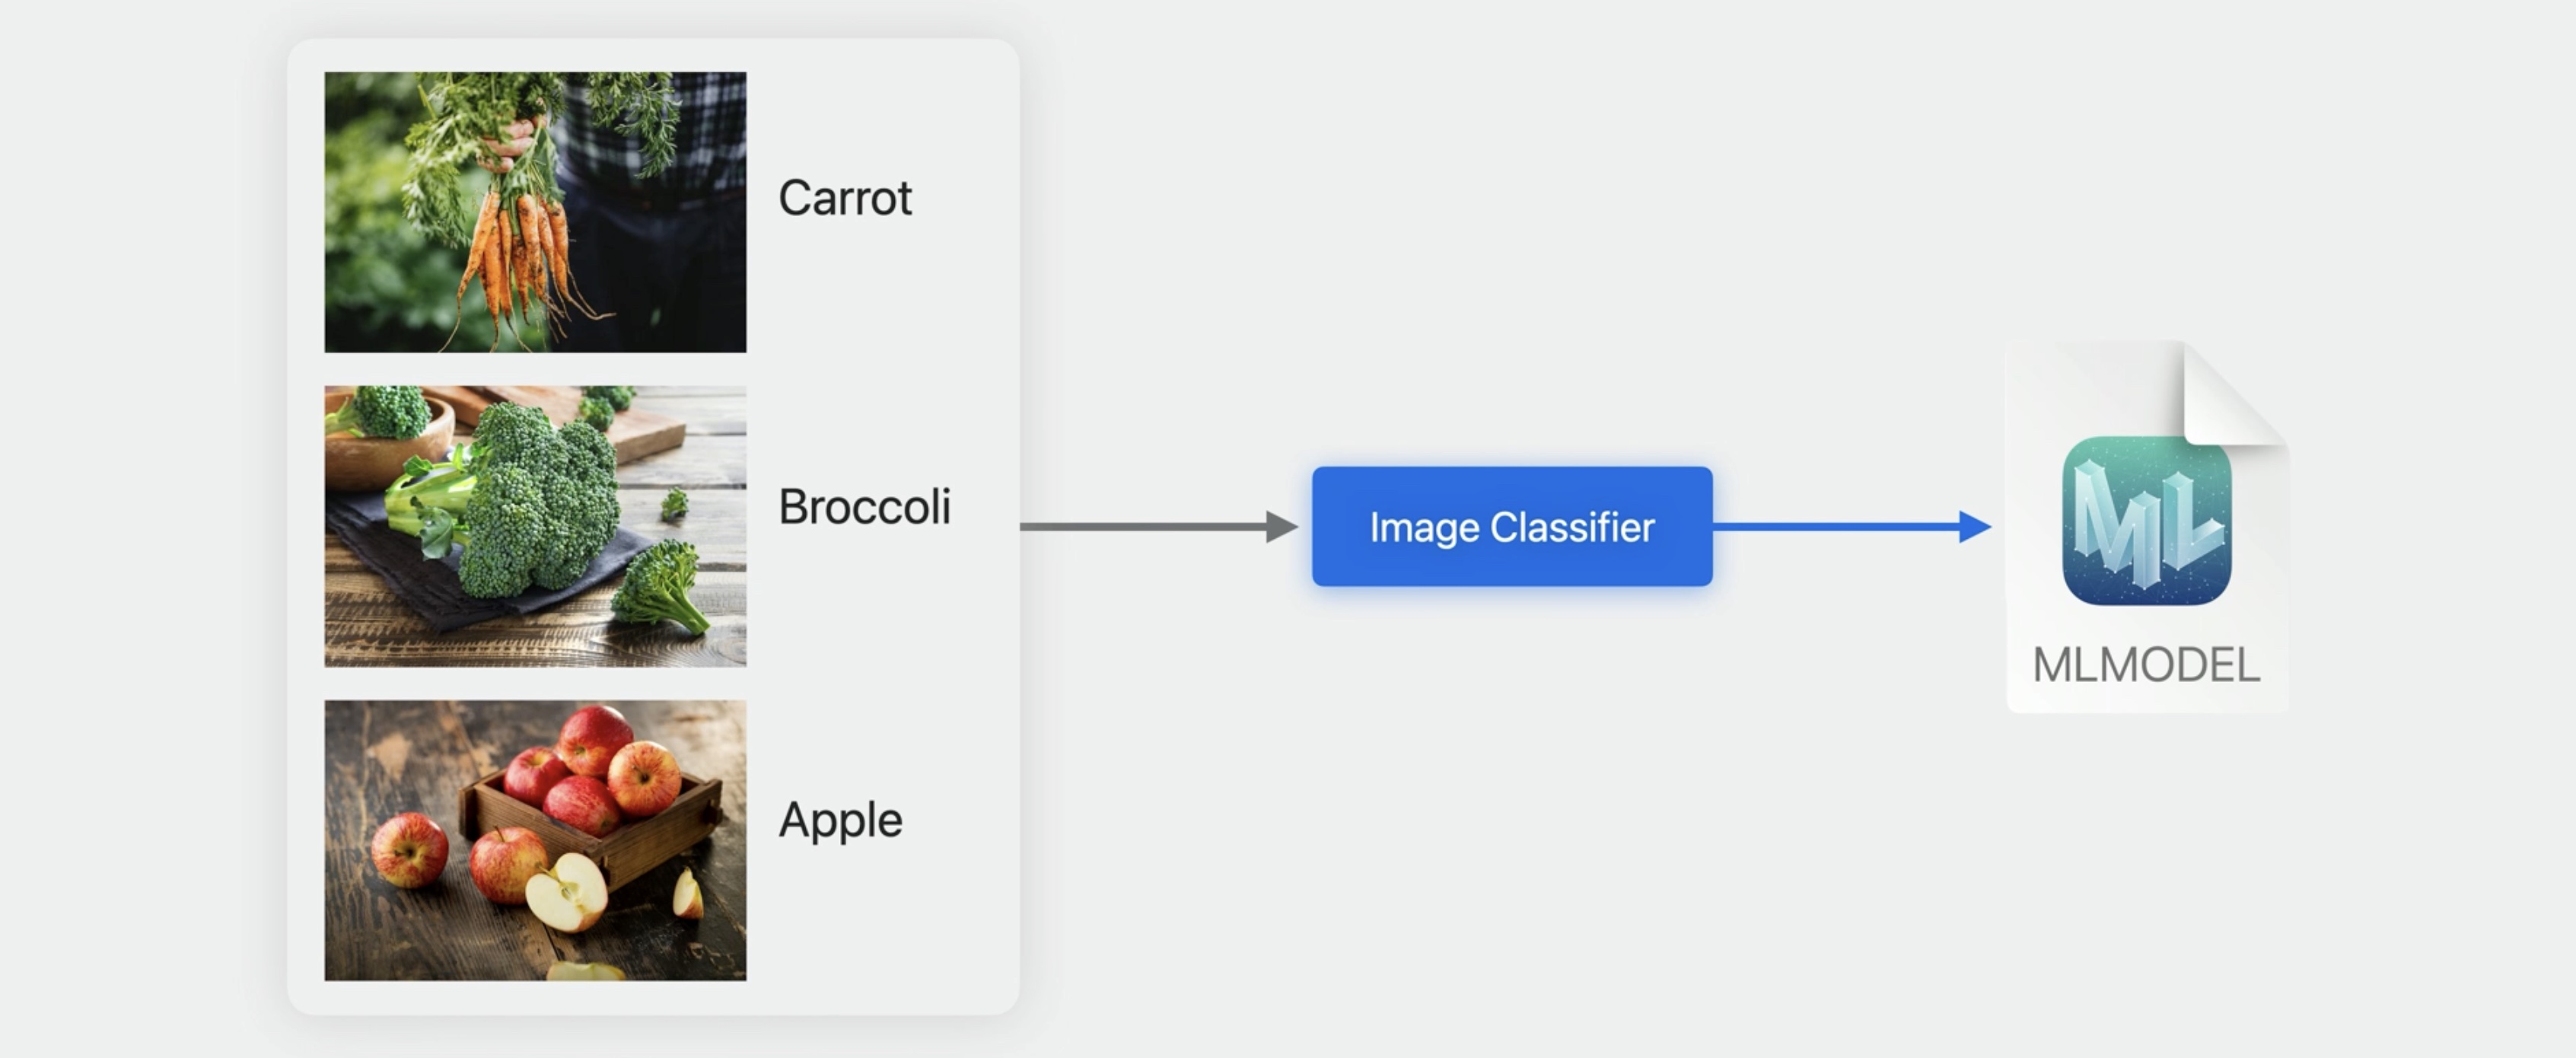 Image Classification Task